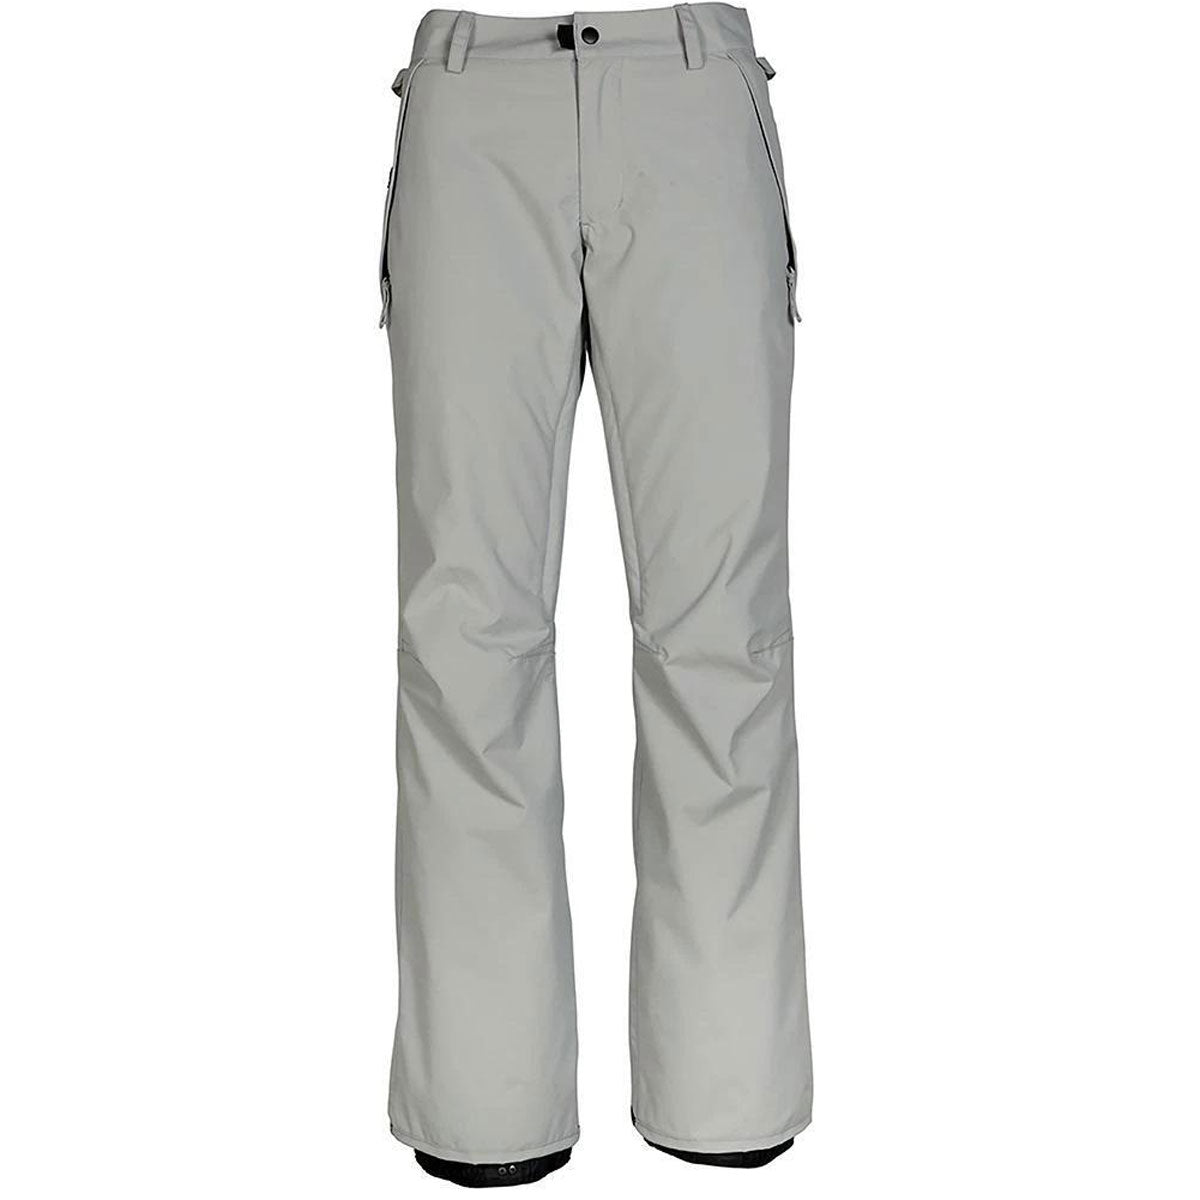 686 Womens Standard Shell Snowboard Pants - Light Grey image 1